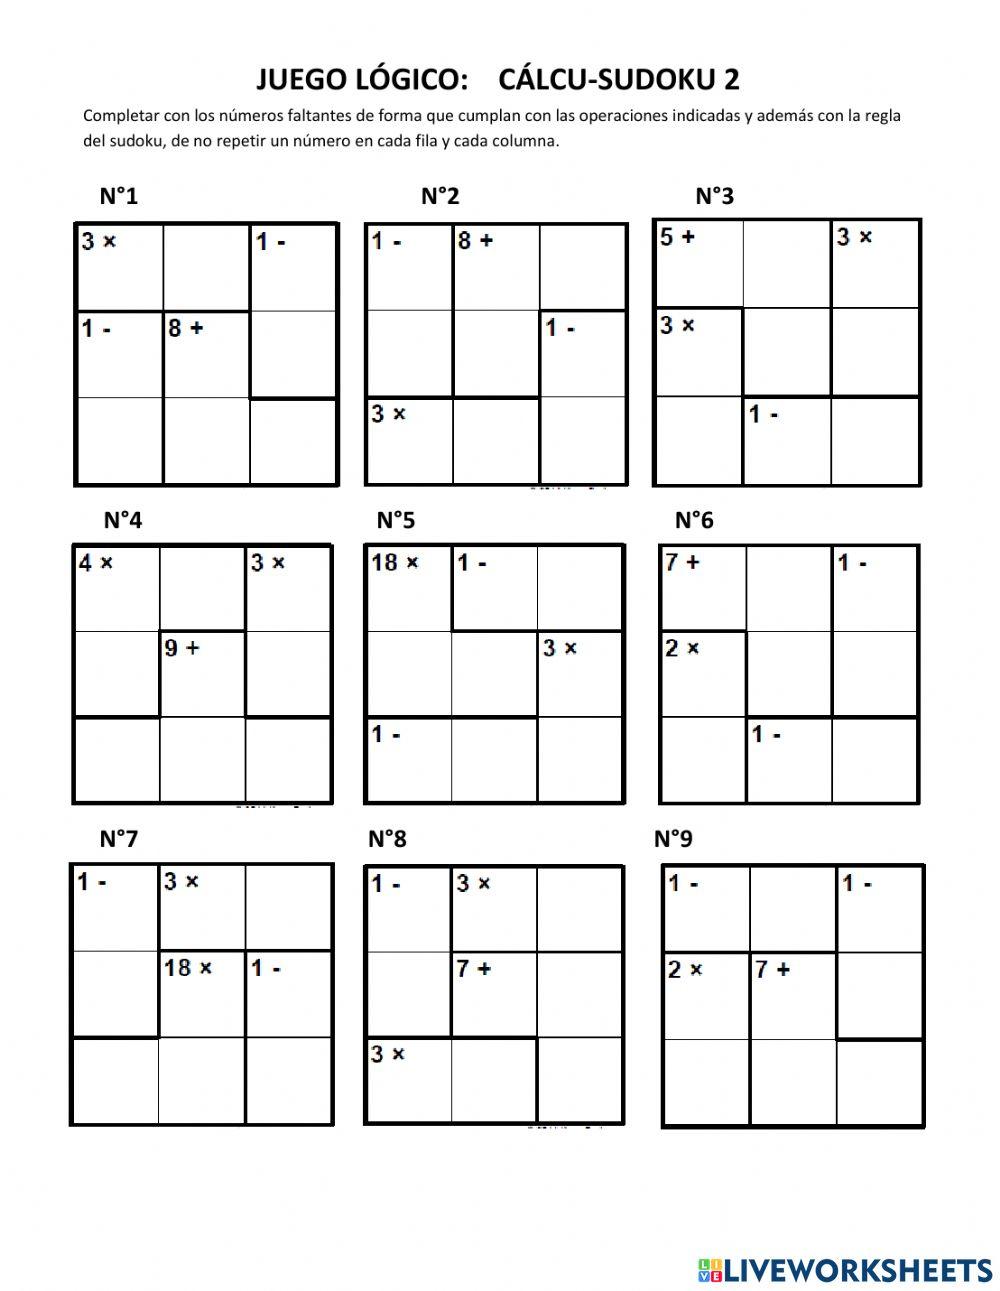 Cálculo-Sudoku 2